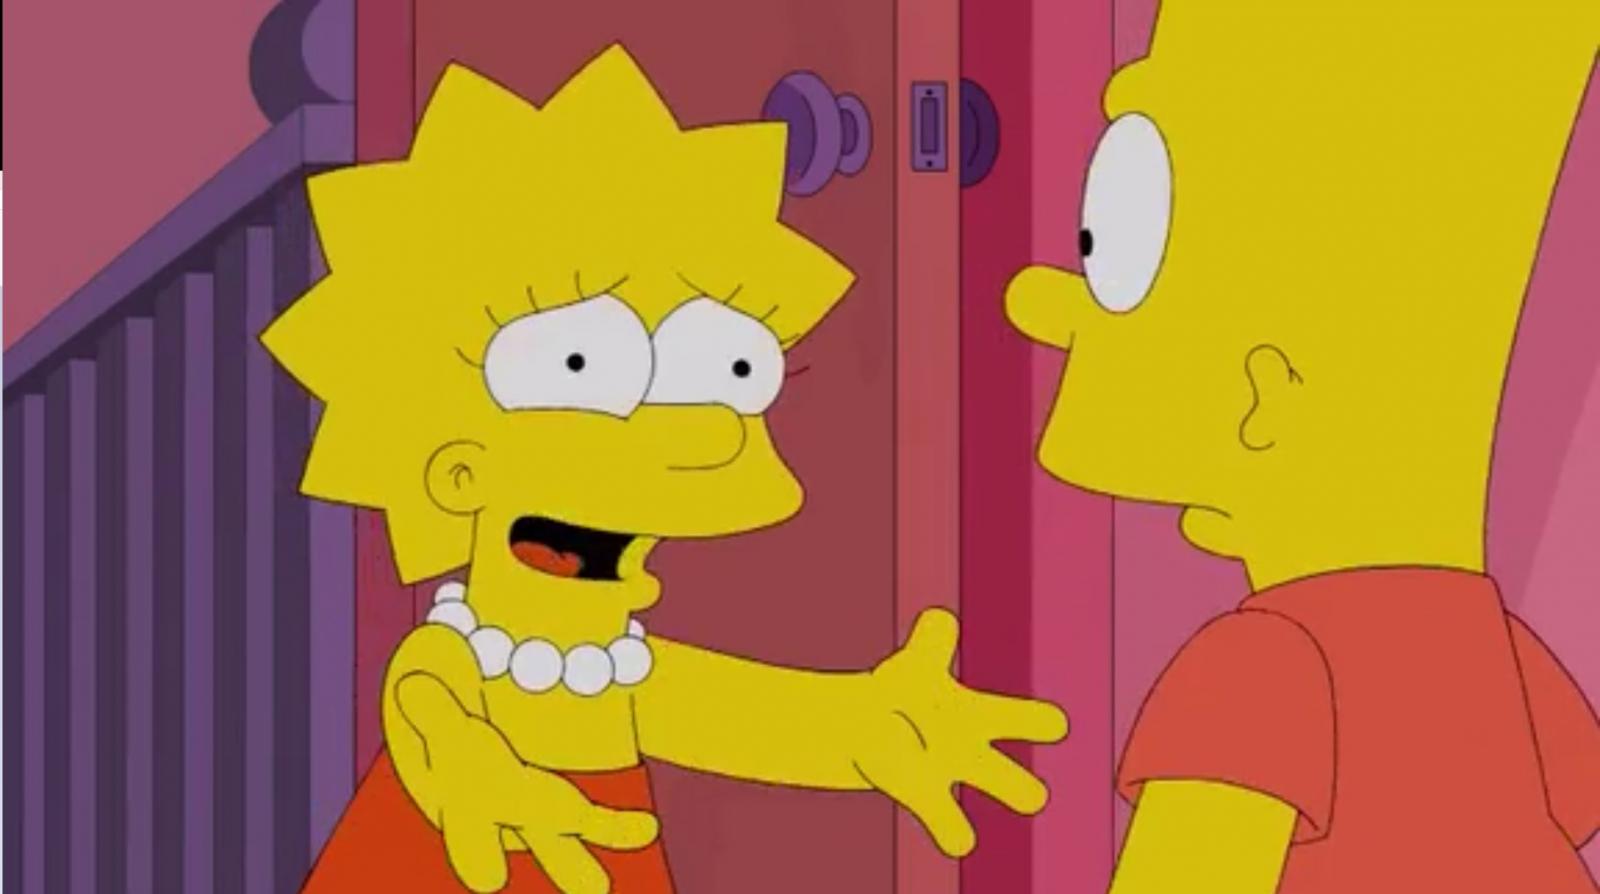 Lisa: Want a hug? 